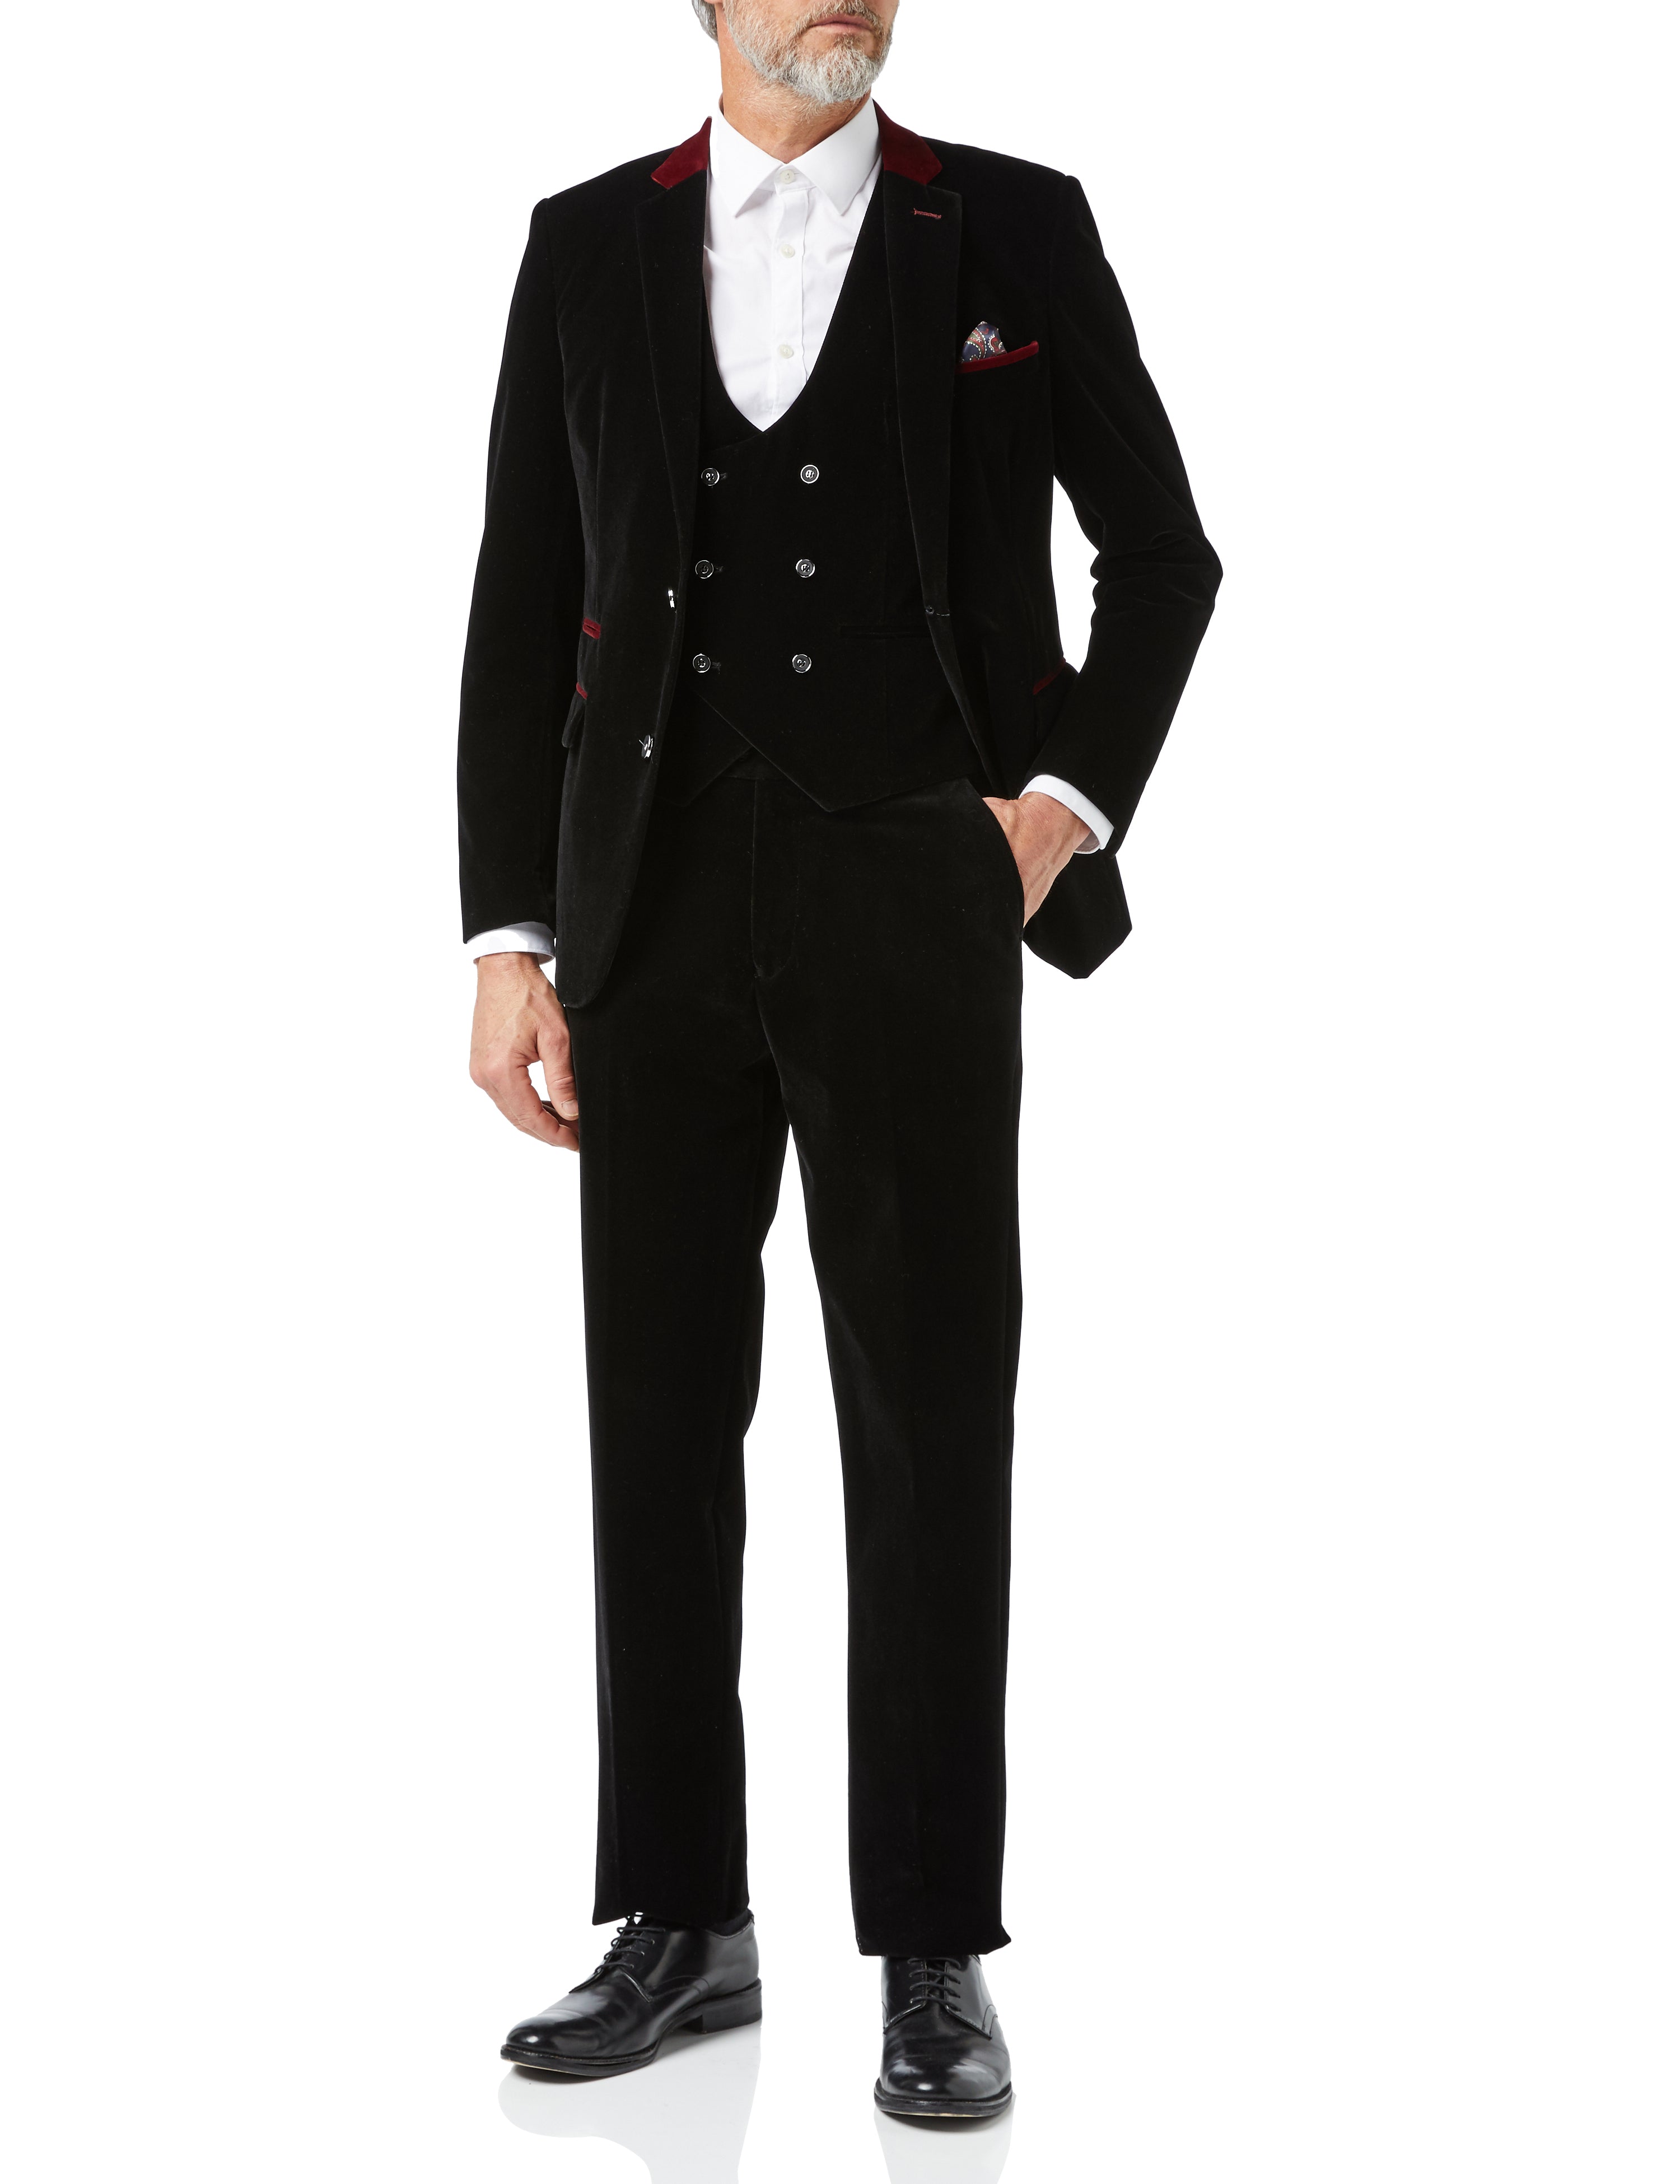 Black Velvet 3 Piece Wedding Suit